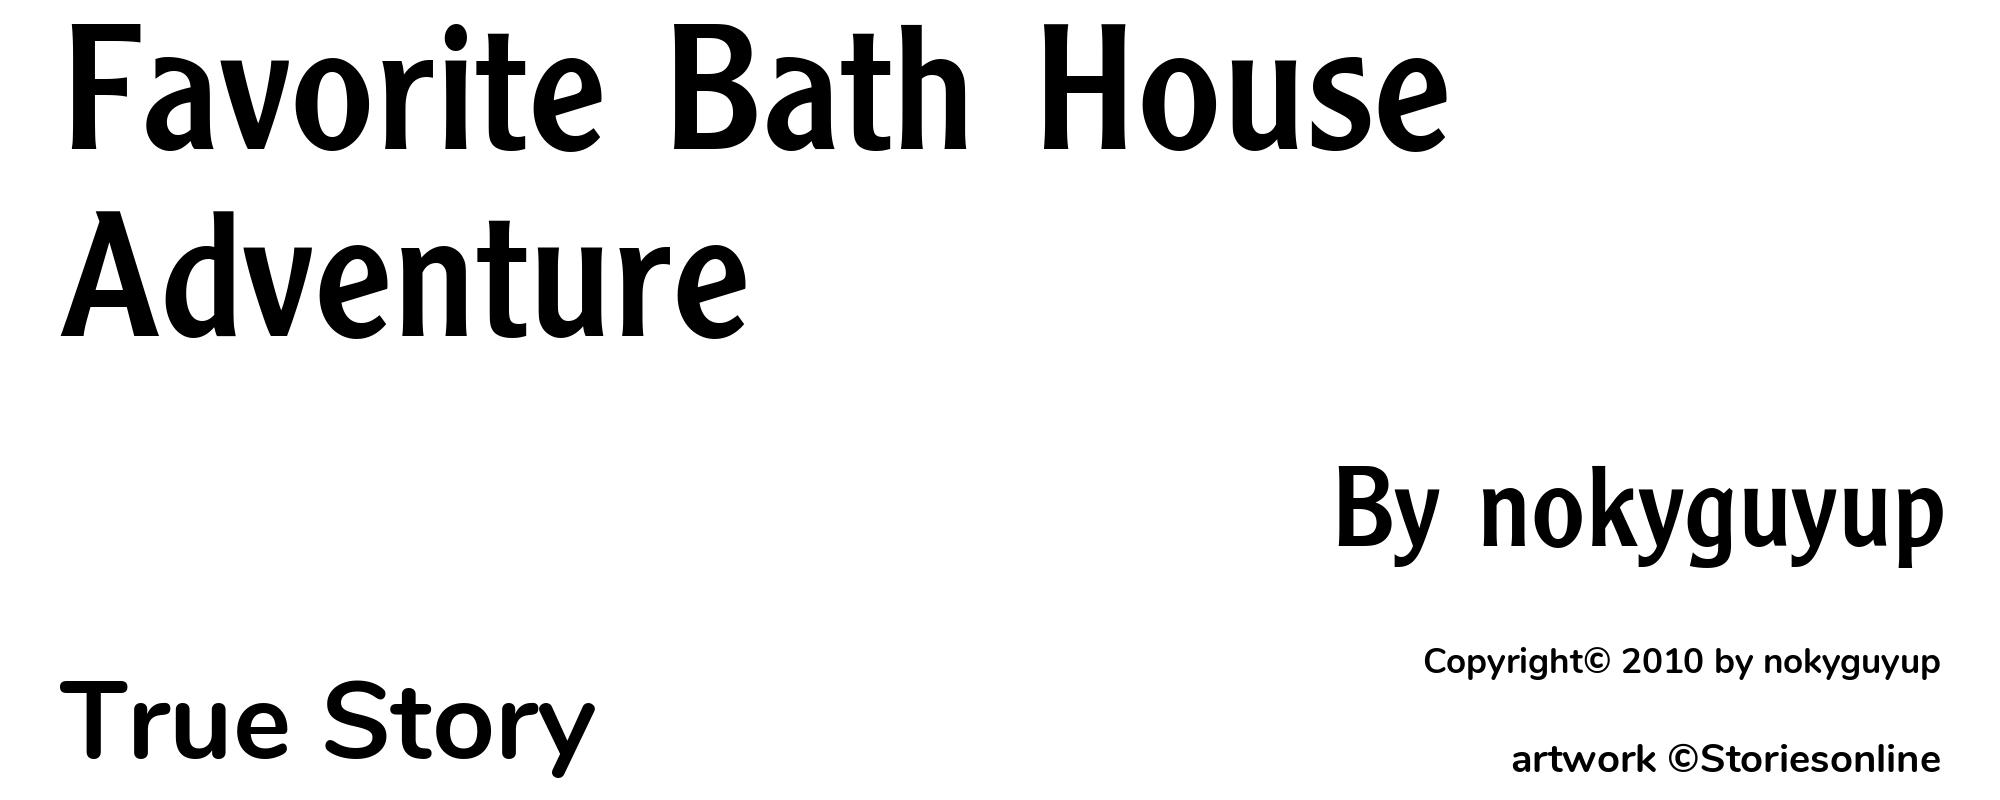 Favorite Bath House Adventure - Cover